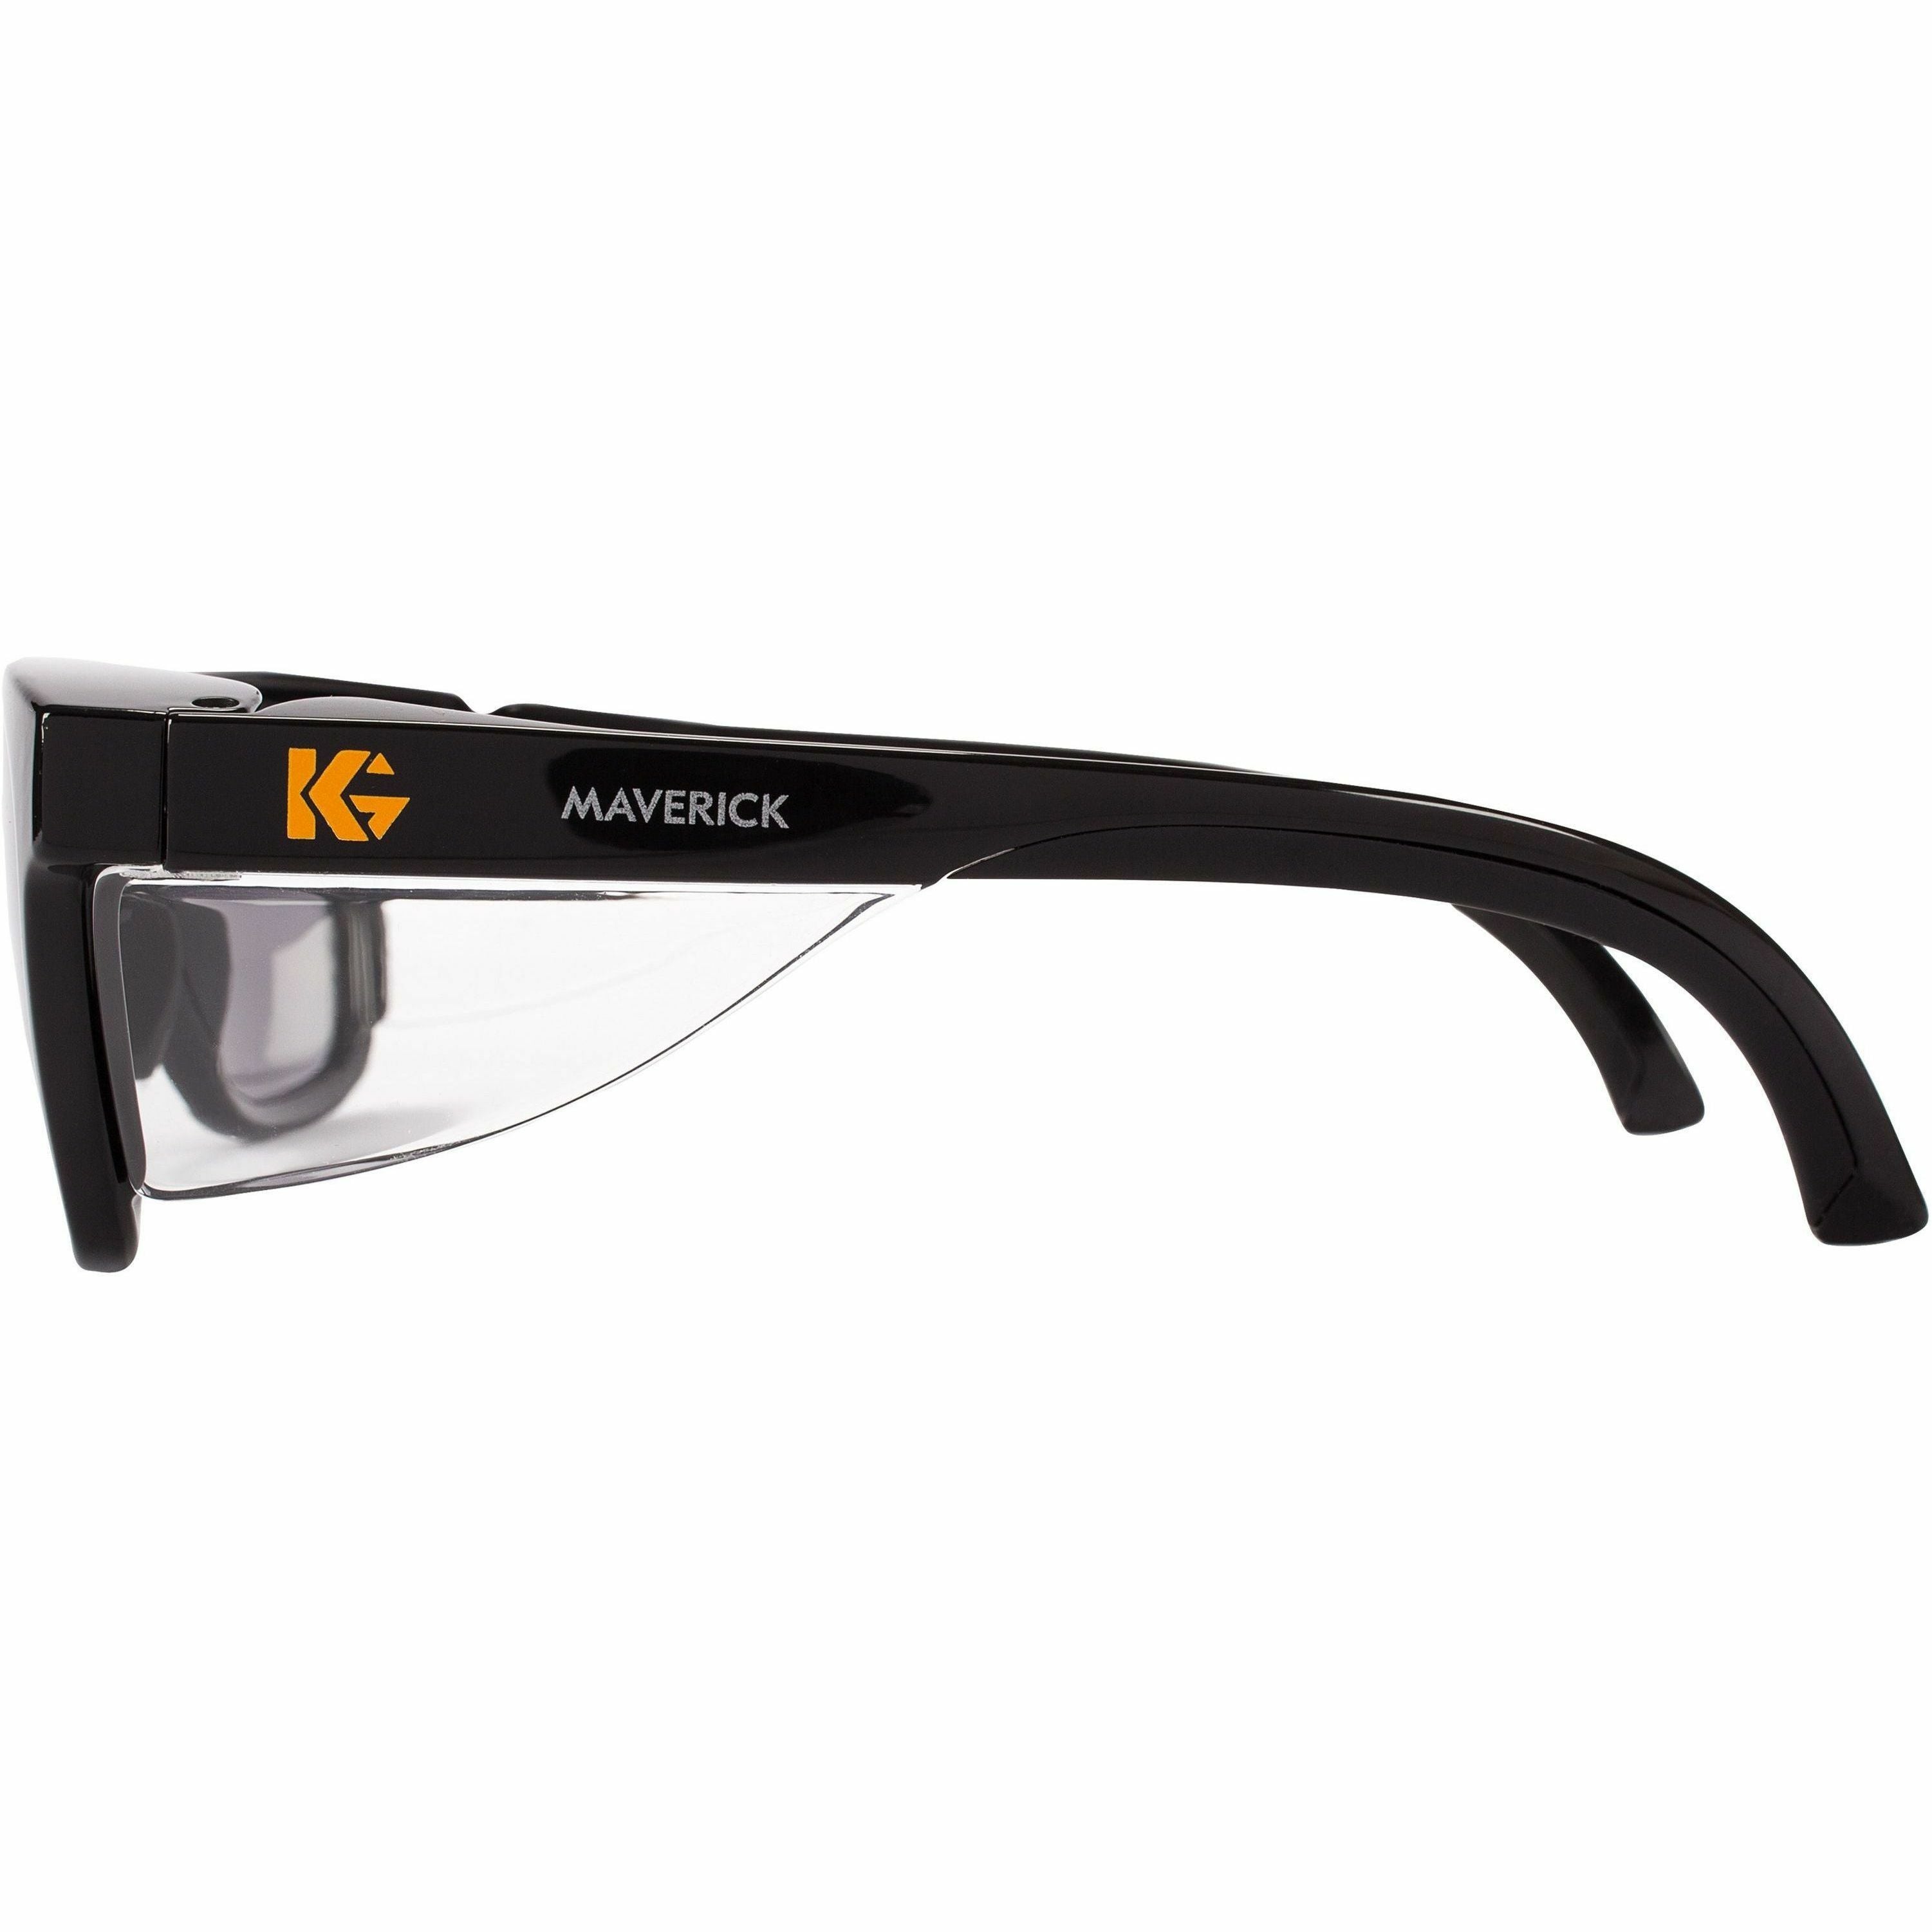 kleenguard-maverick-safety-eyewear-recommended-for-eye-universal-size-uva-uvb-uvc-protection-polycarbonate-durable-lightweight-wraparound-frame-comfortable-anti-fog-anti-scratch-impact-resistant-12-box_kcc49311bx - 2